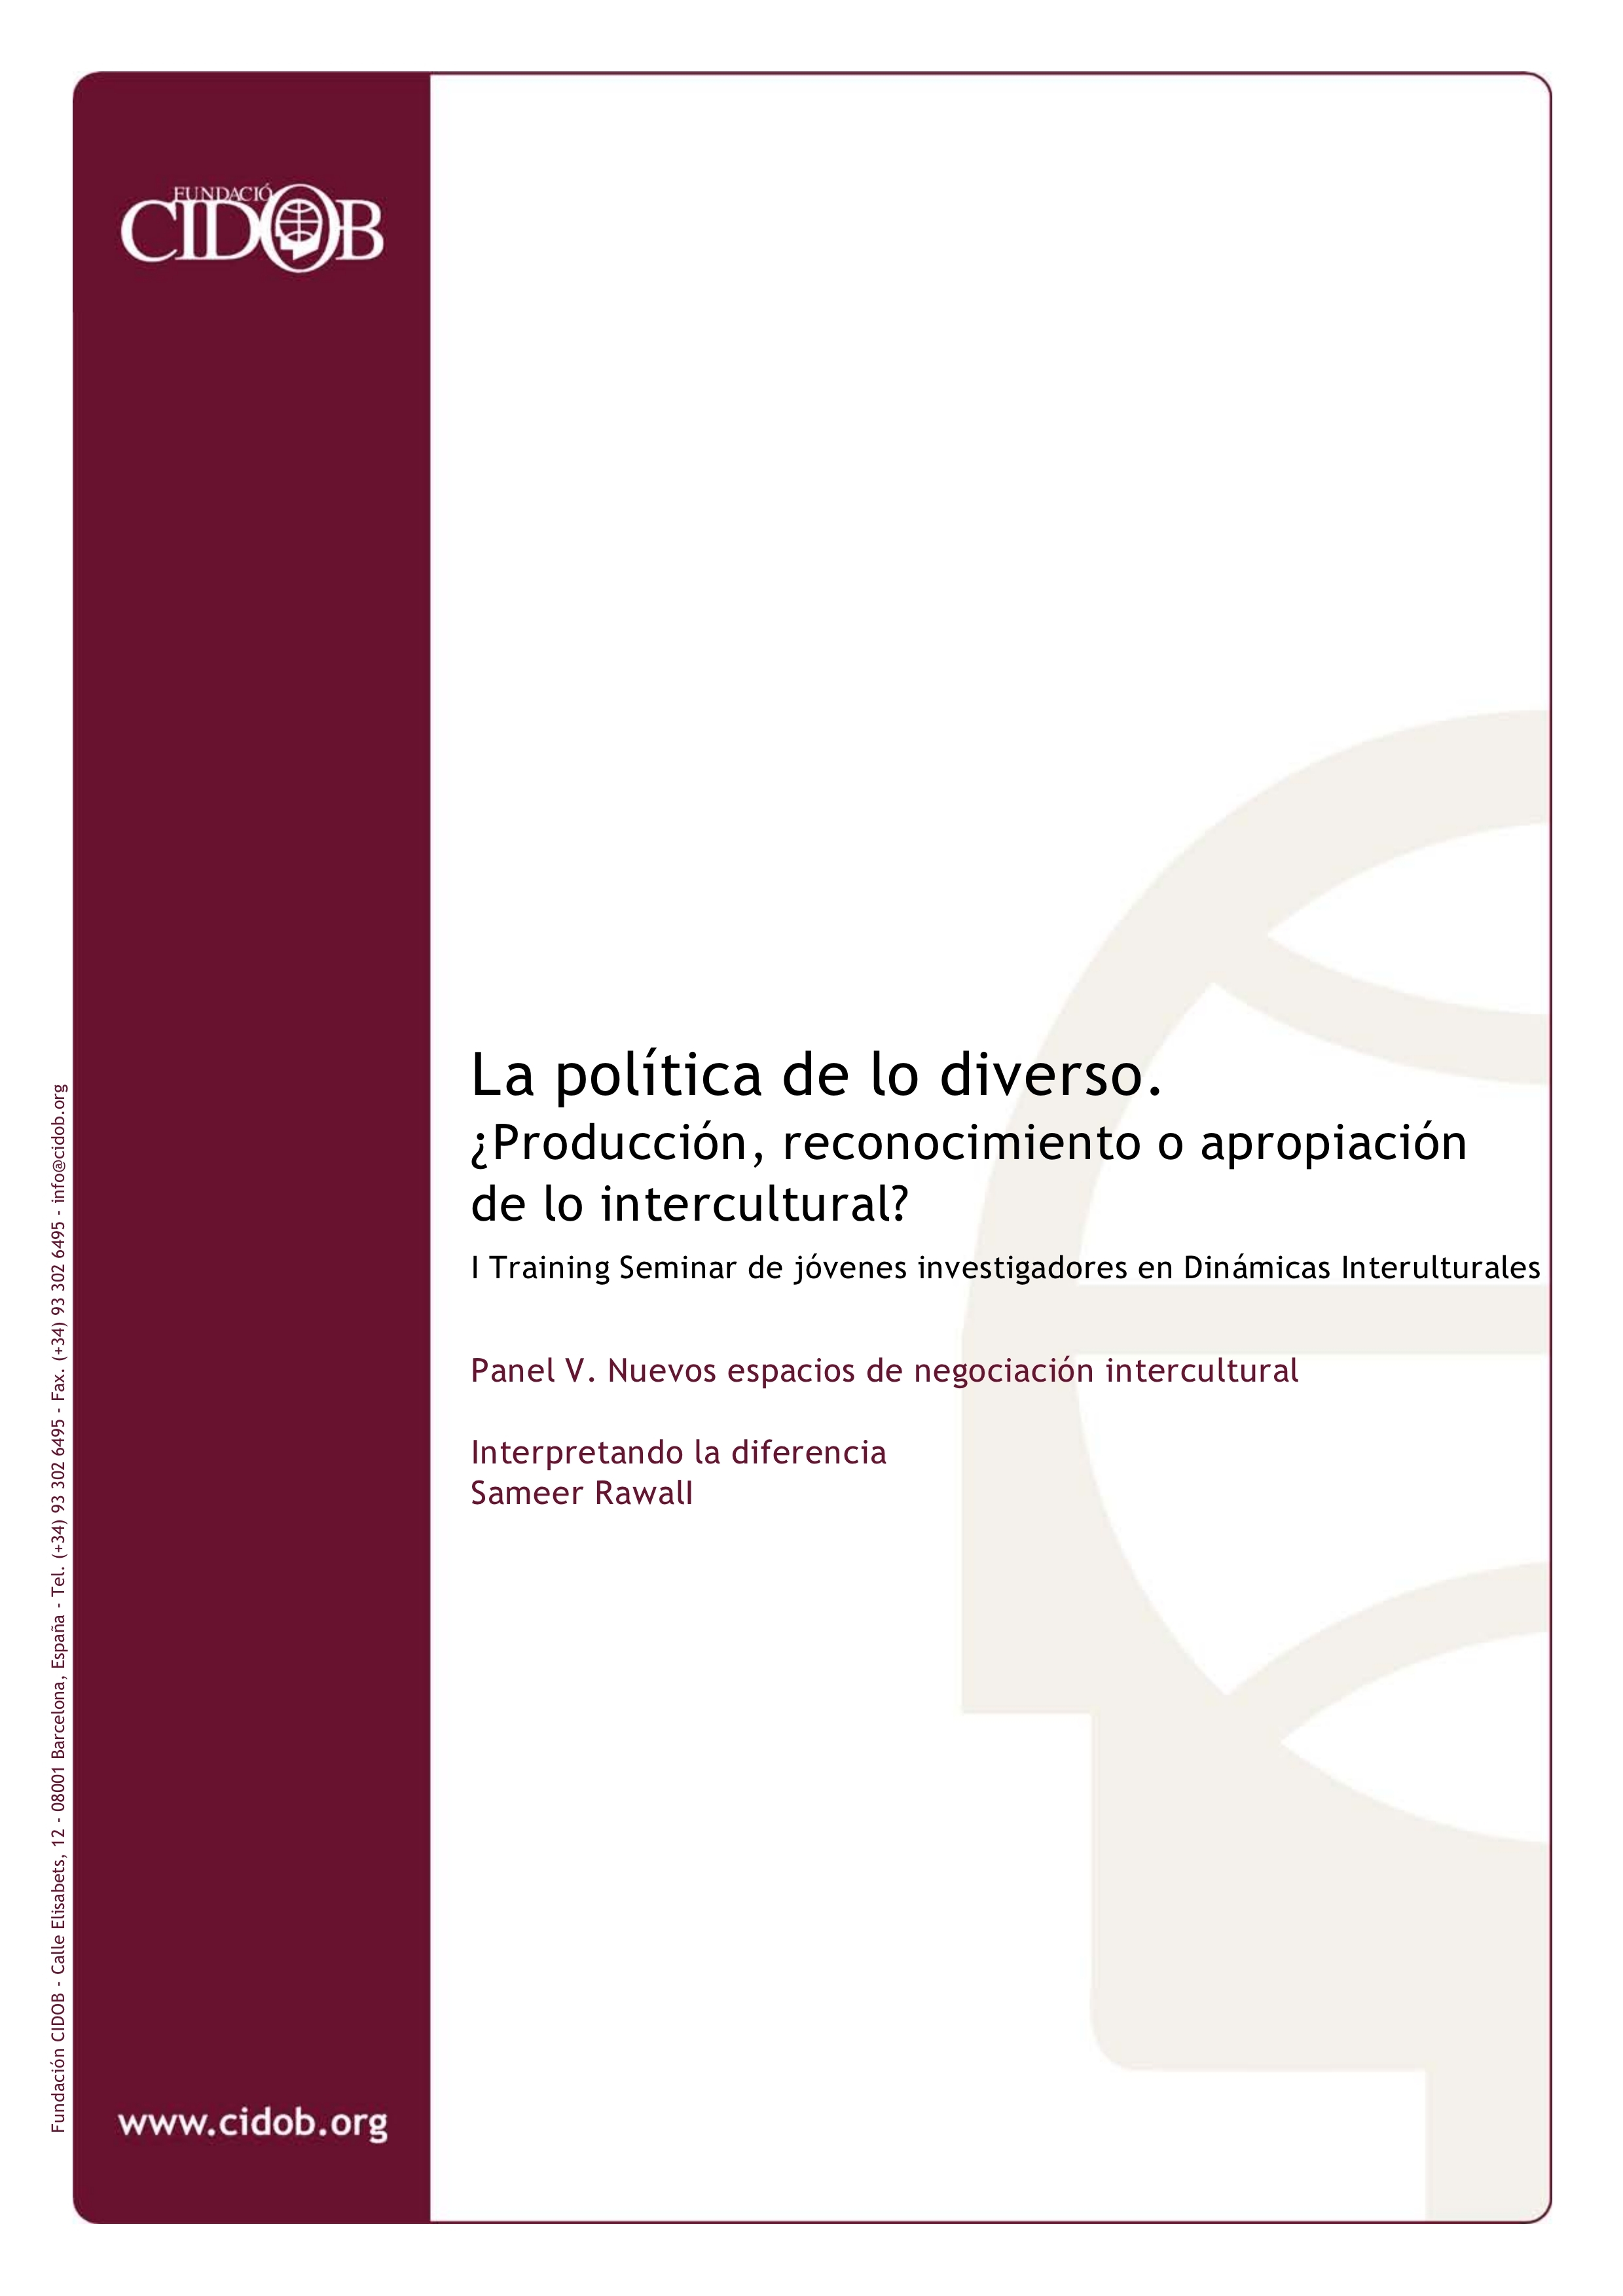 Paper presented in CIDOB, Barcelona conference